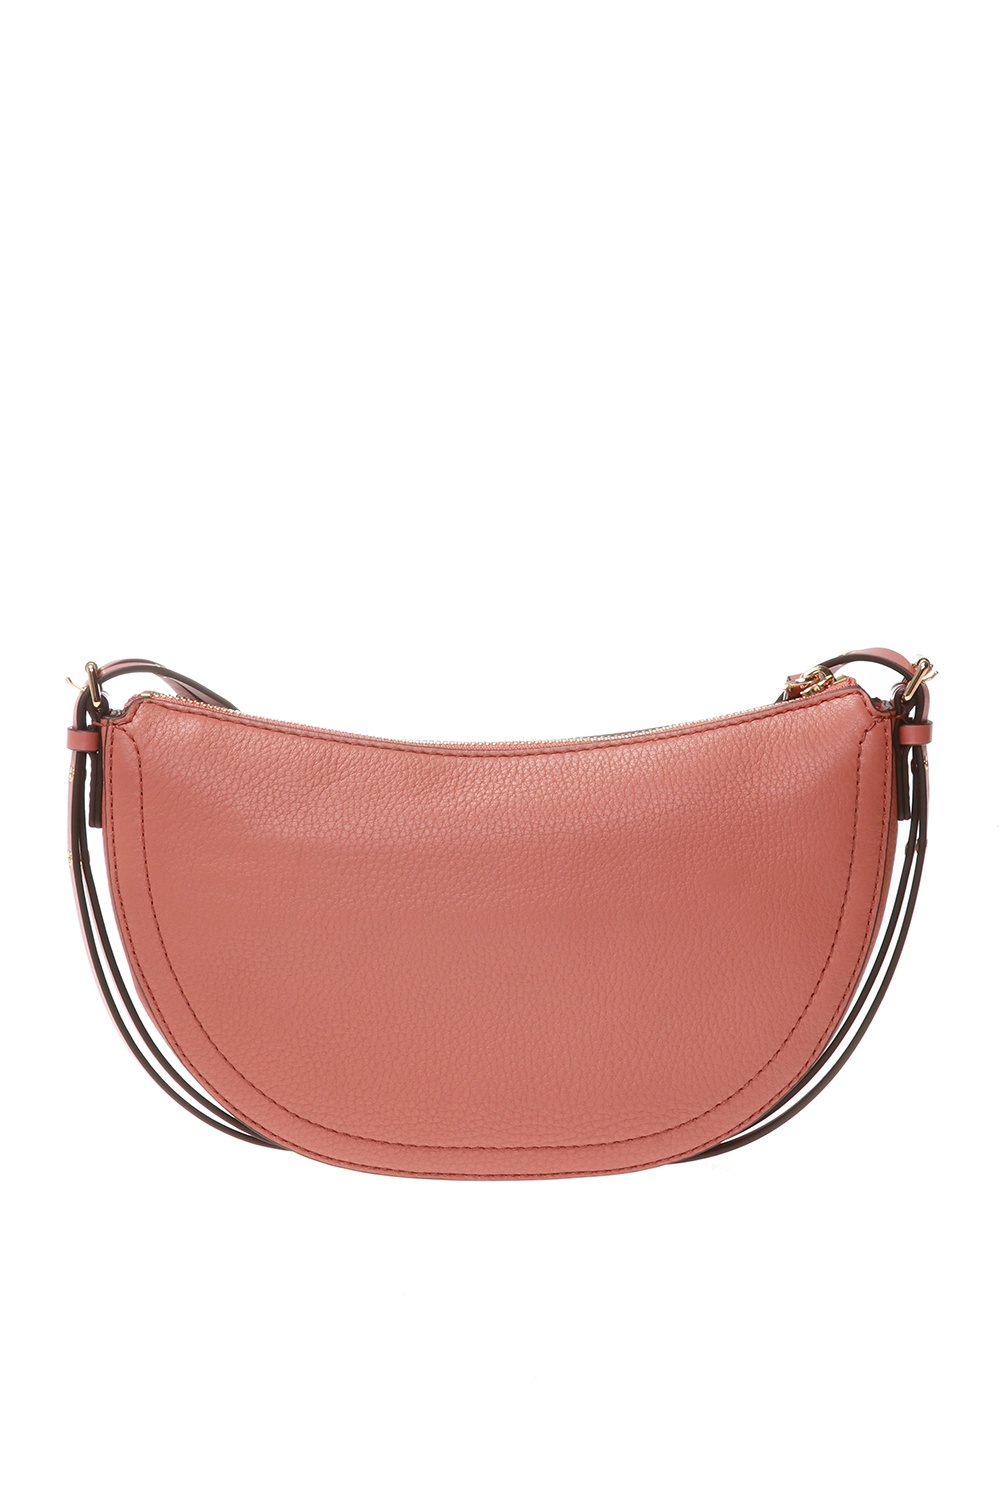 Buy Michael Kors Bags & Handbags online - 821 products